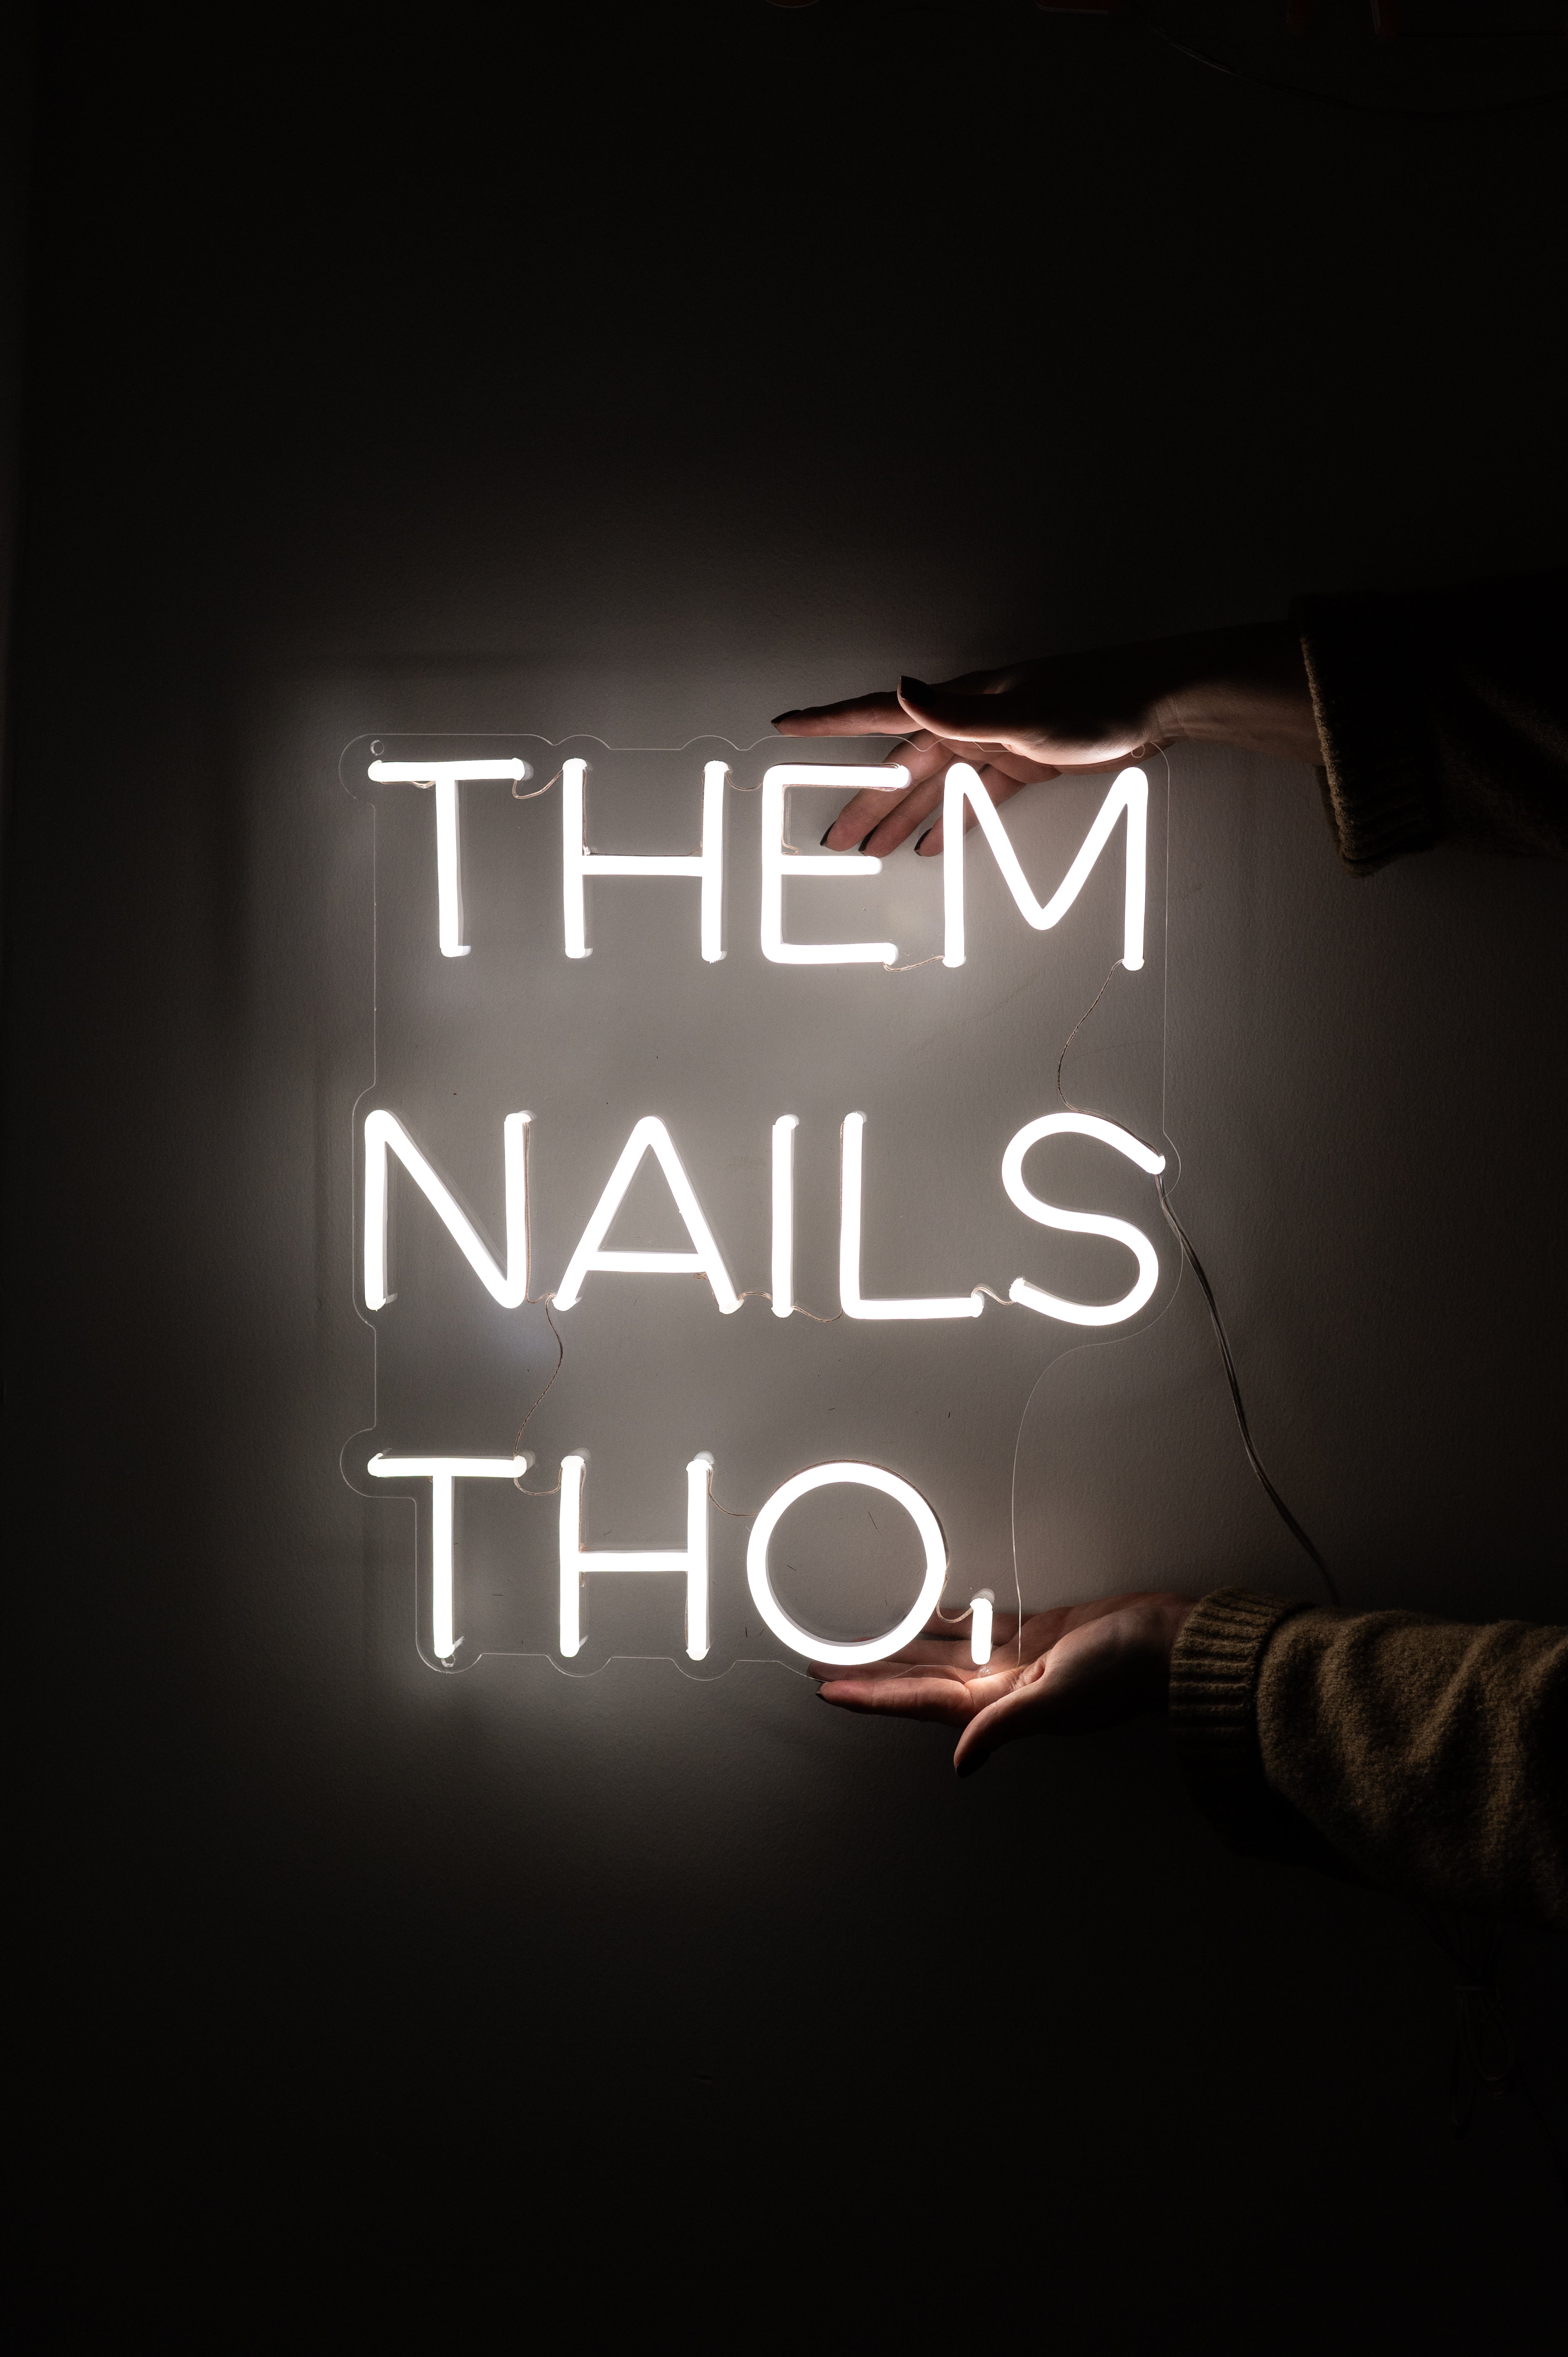 Them nails tho.